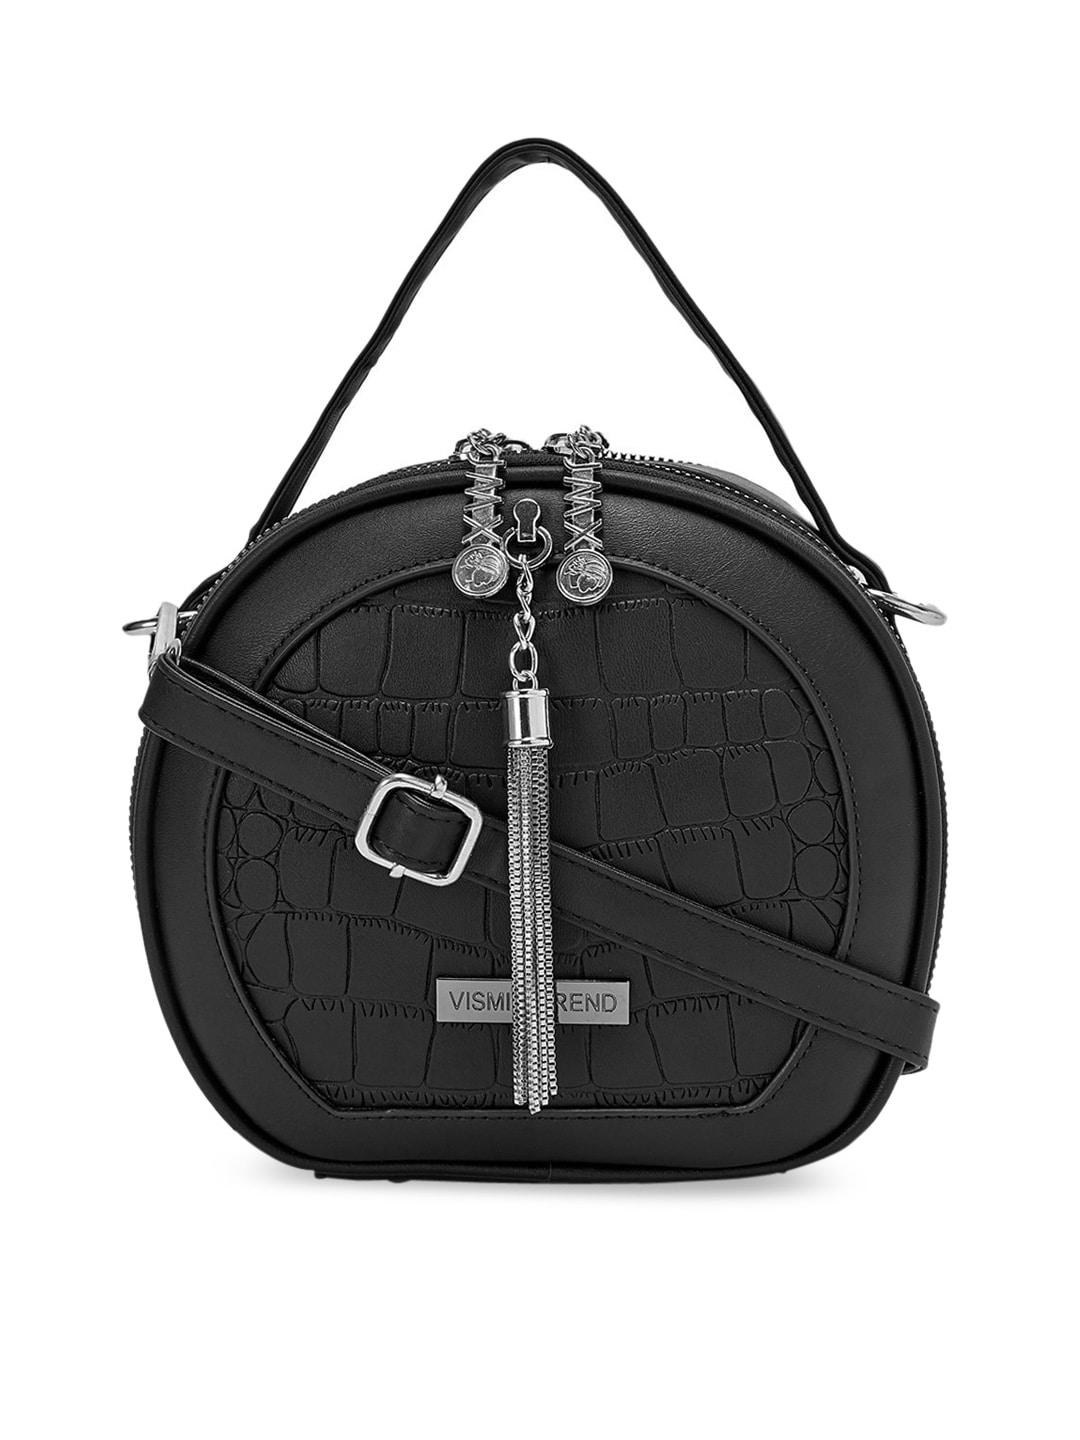 vismiintrend black textured pu structured sling bag with tasselled